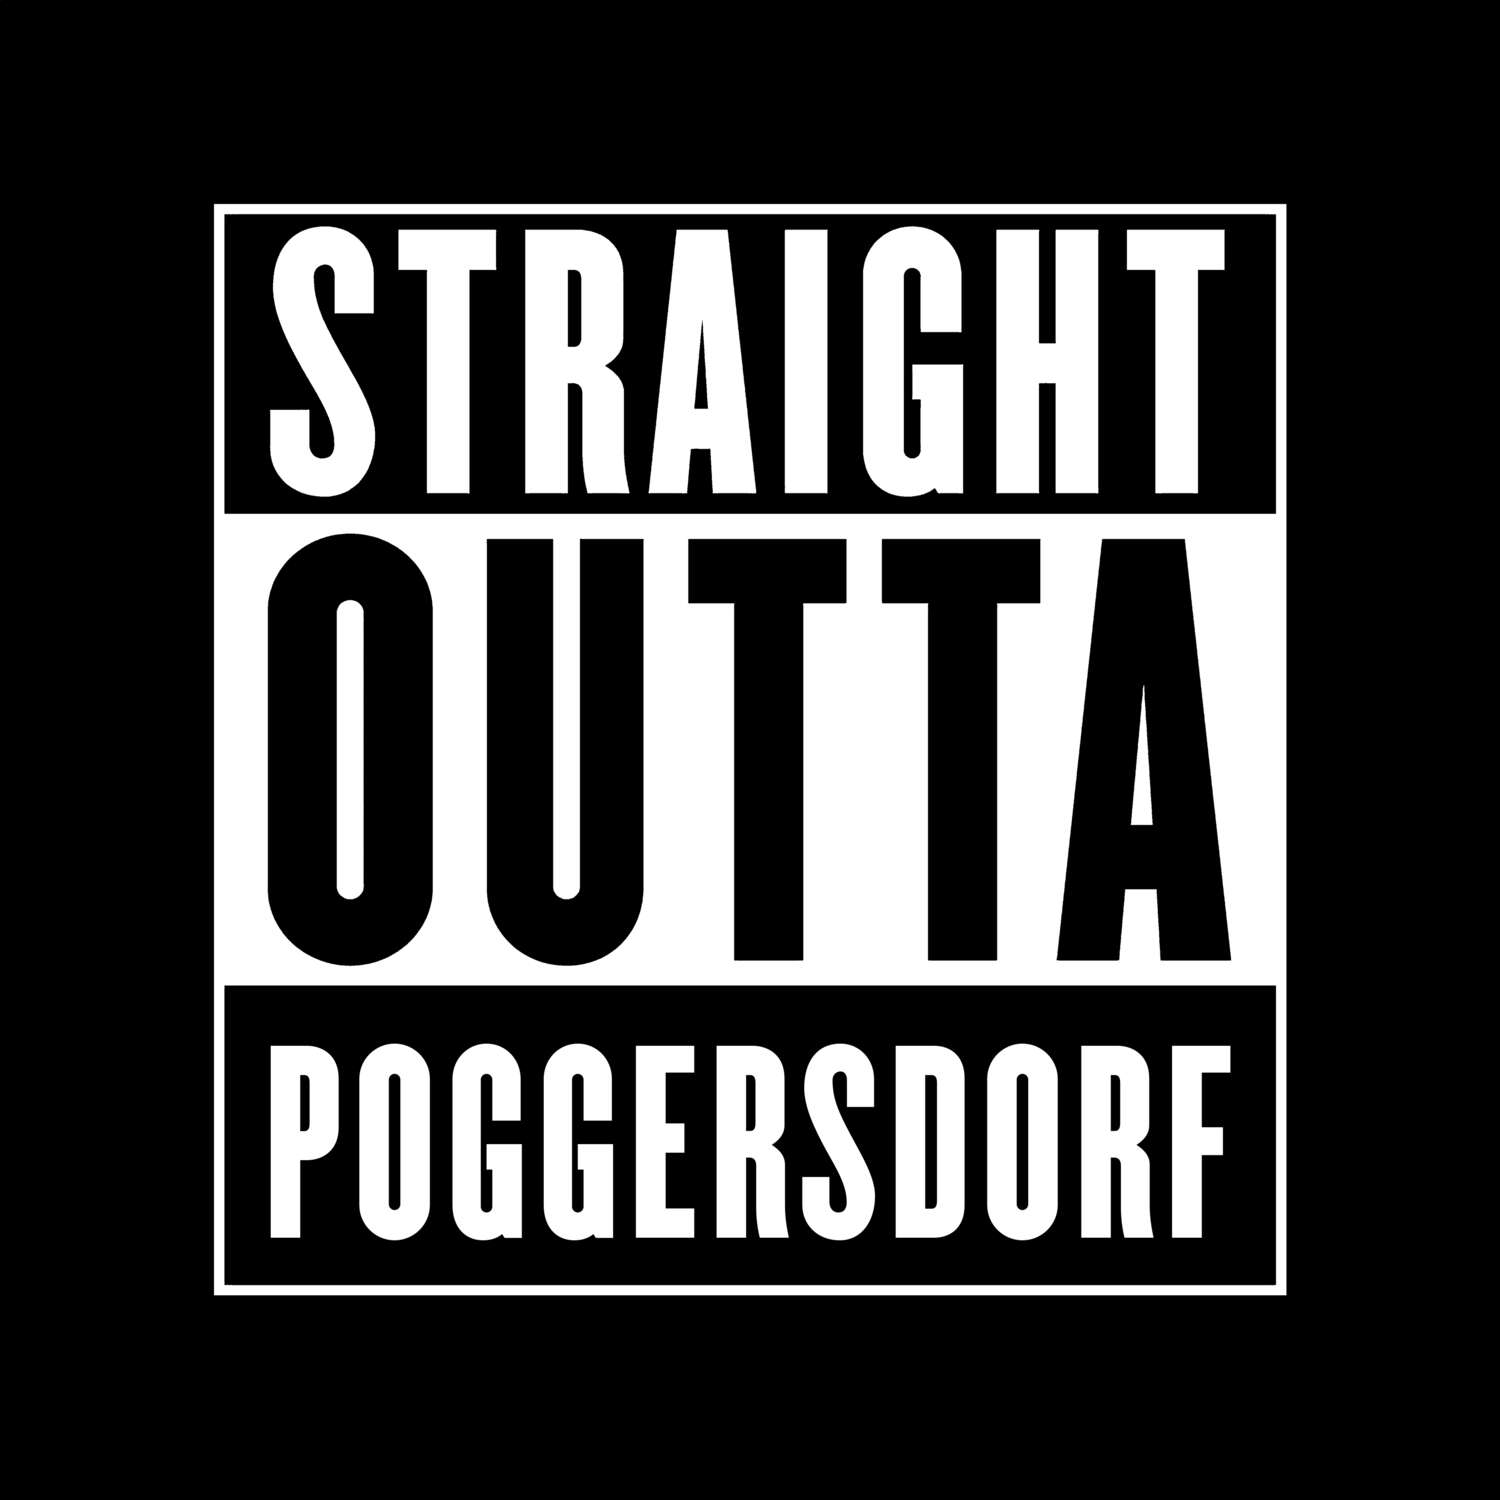 Poggersdorf T-Shirt »Straight Outta«